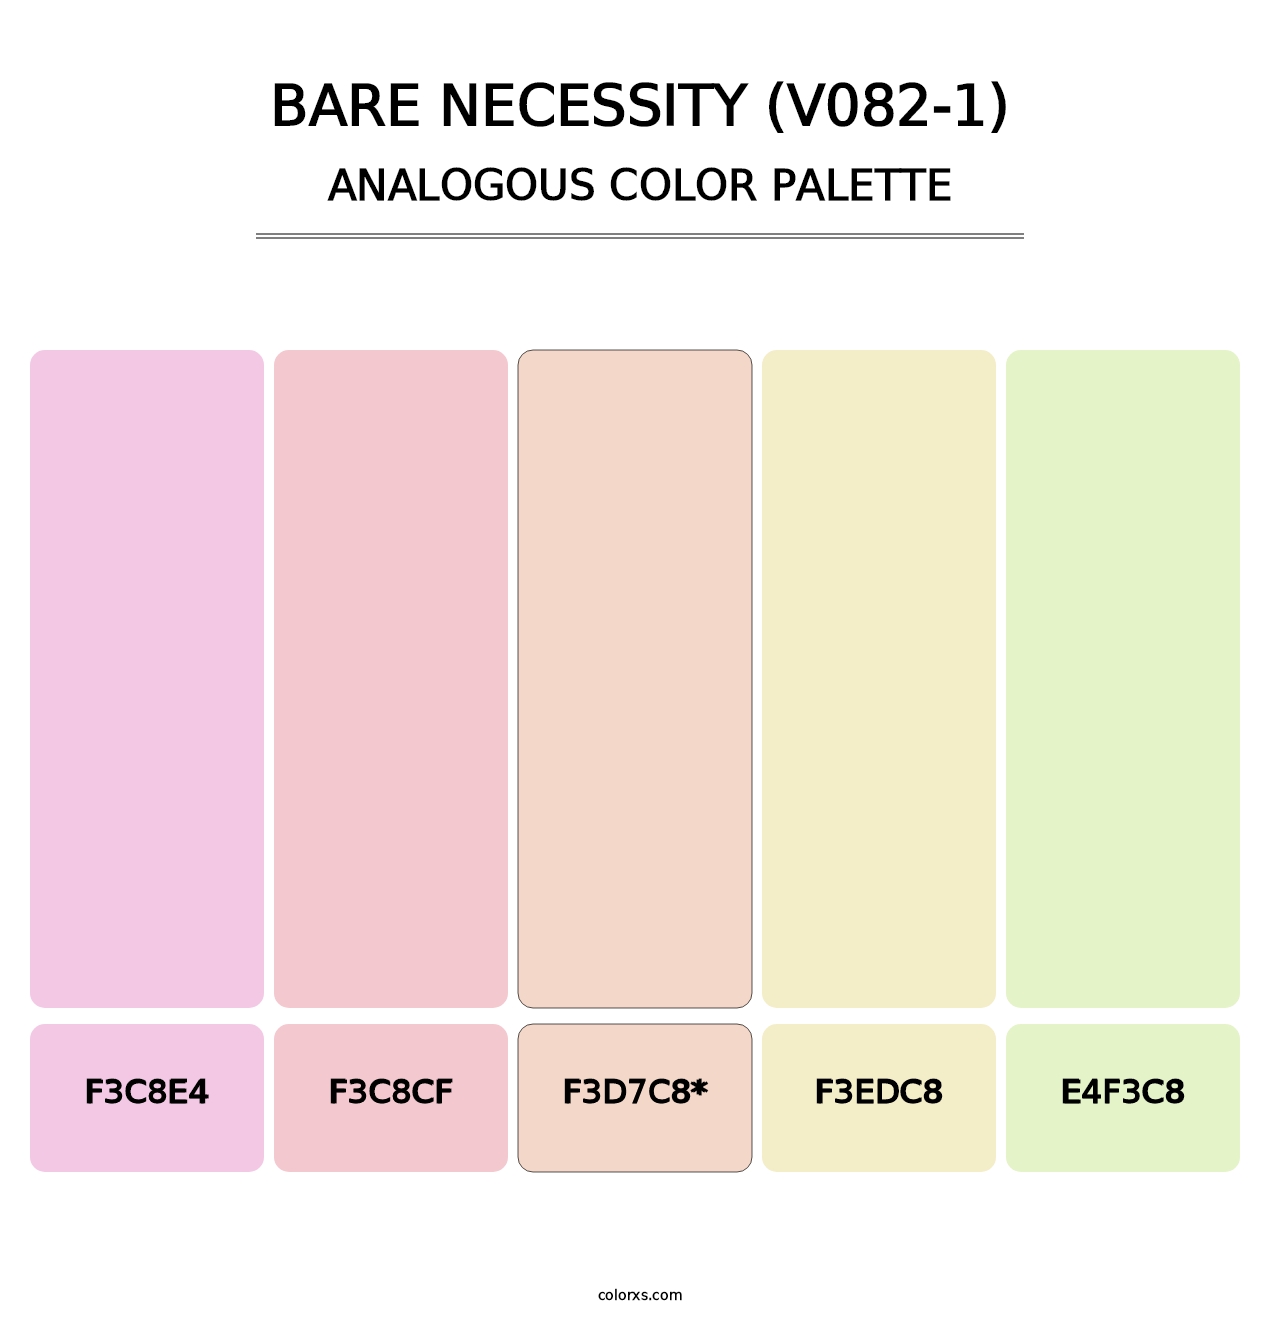 Bare Necessity (V082-1) - Analogous Color Palette